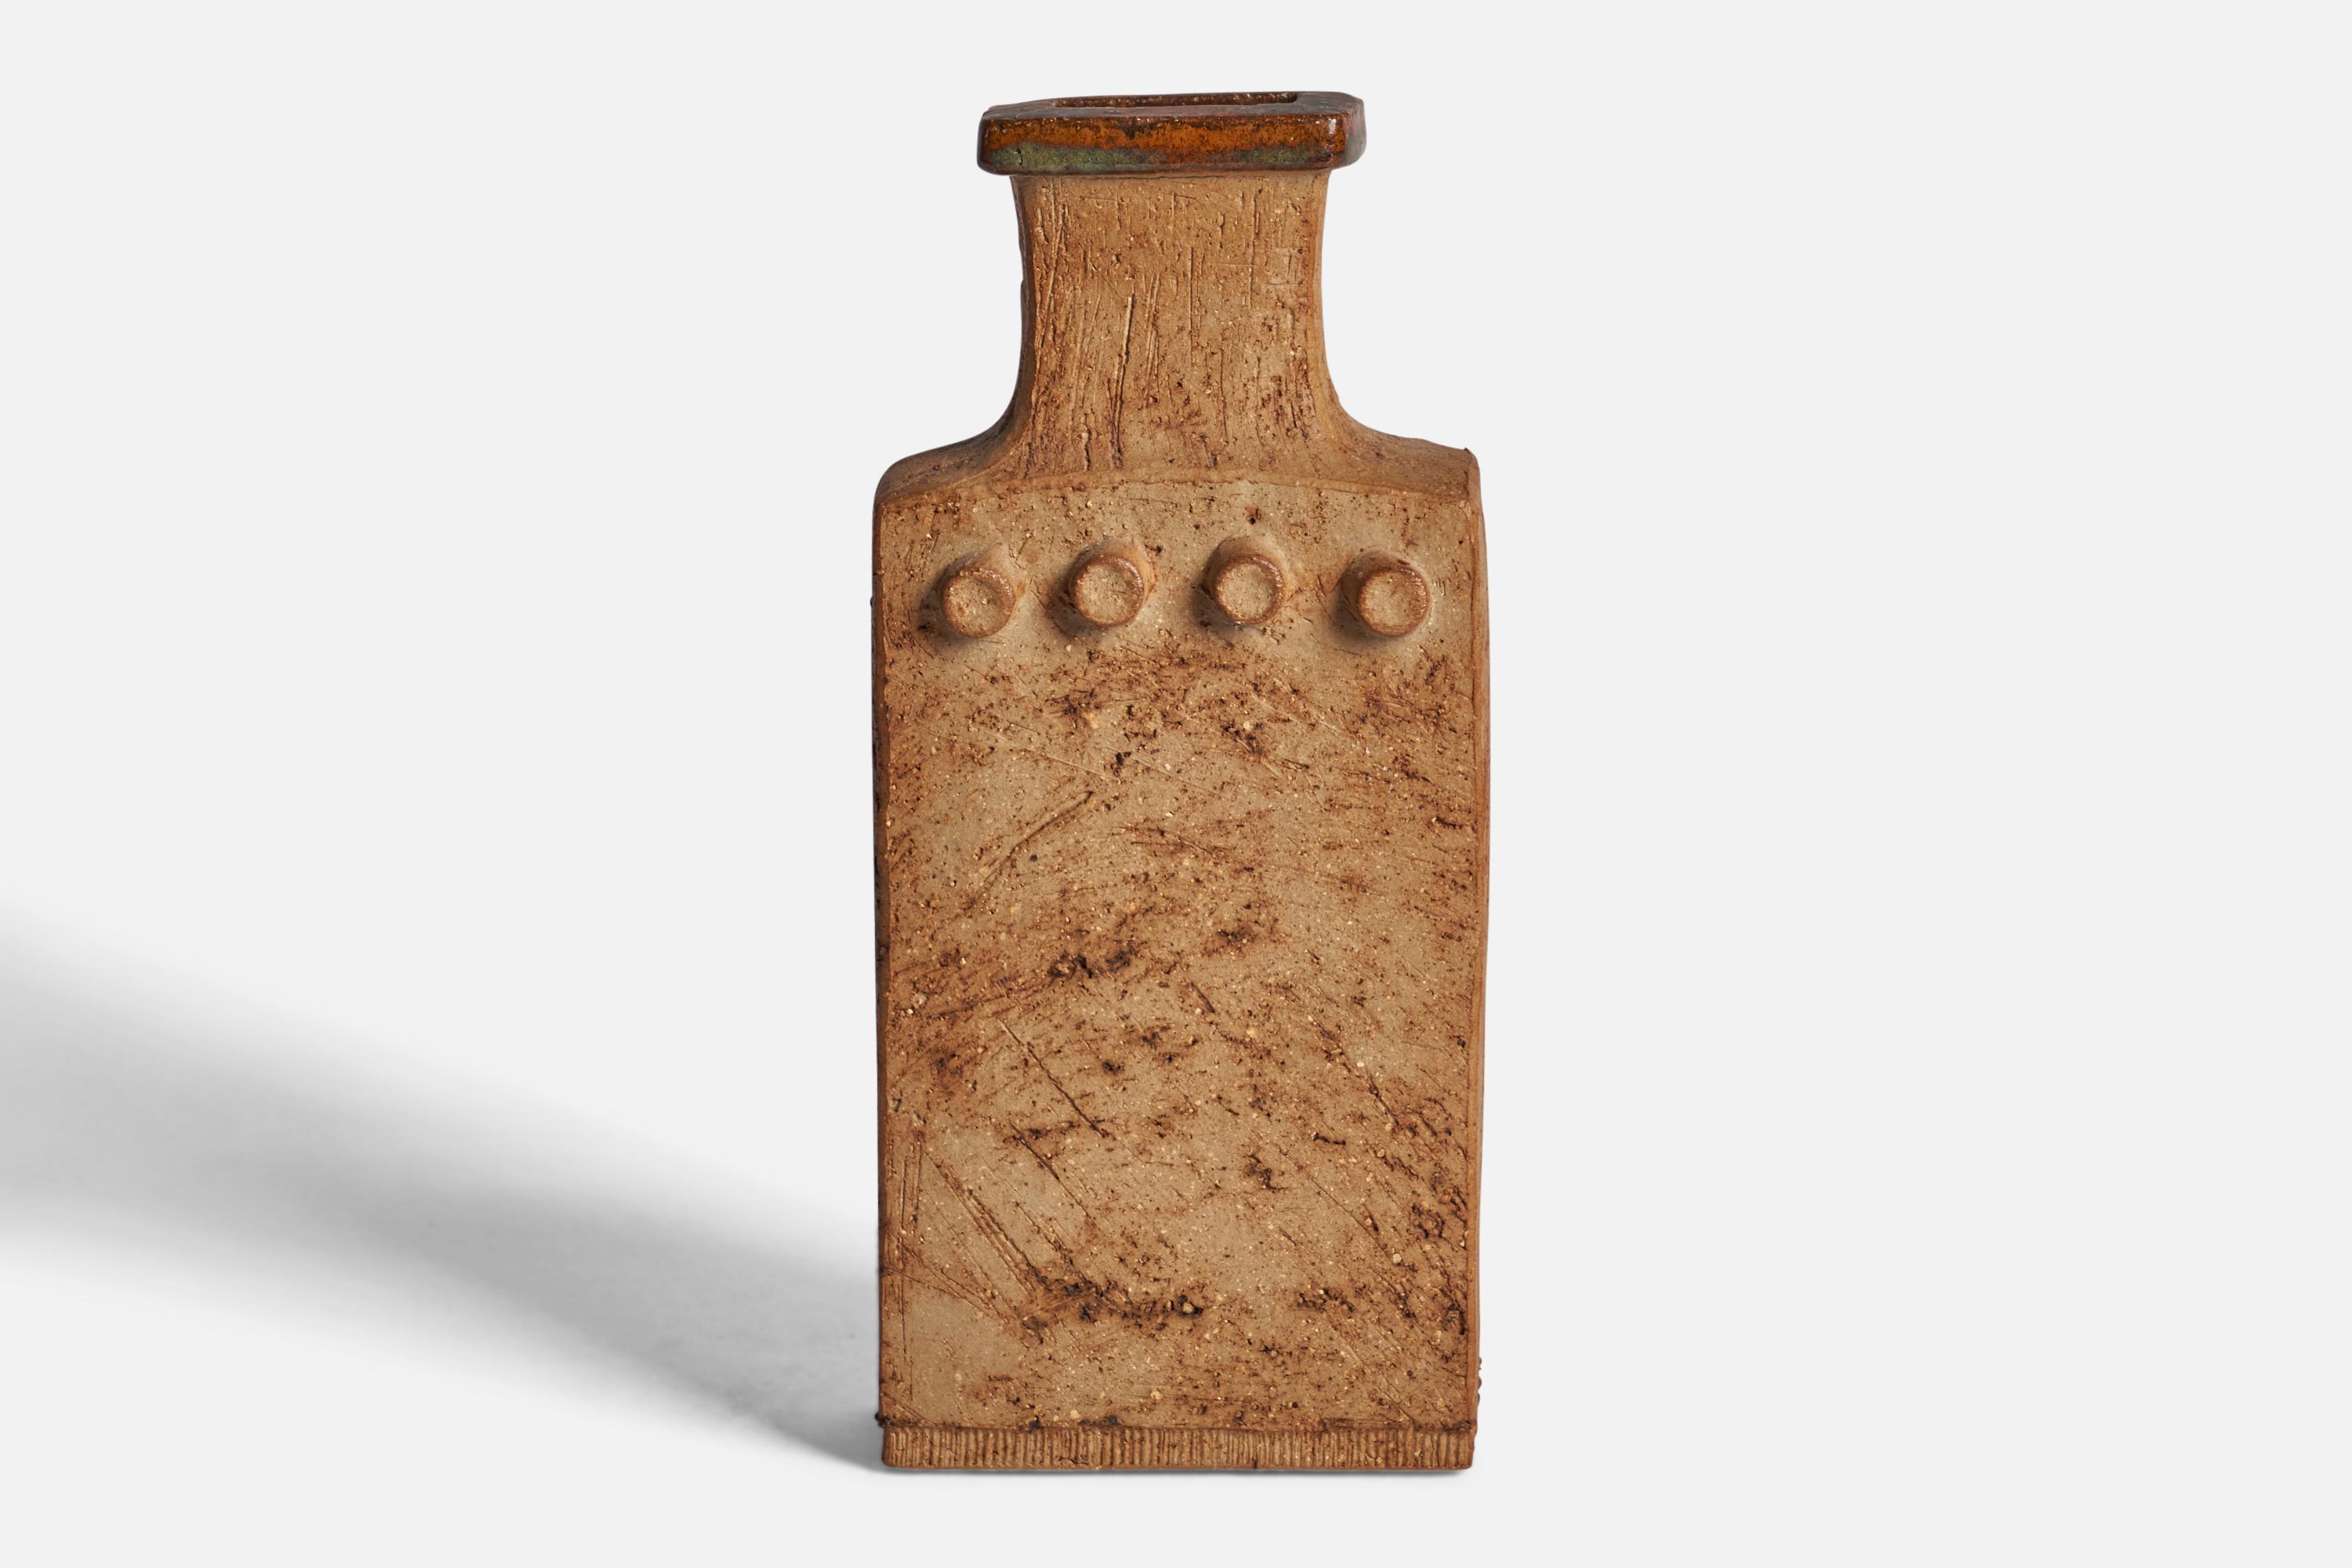 A semi-glazed stoneware vase designed and produced by Curt Addin, Glumslöv, Sweden, 1970s.

“CMA — Curt m. Addin” signature on bottom